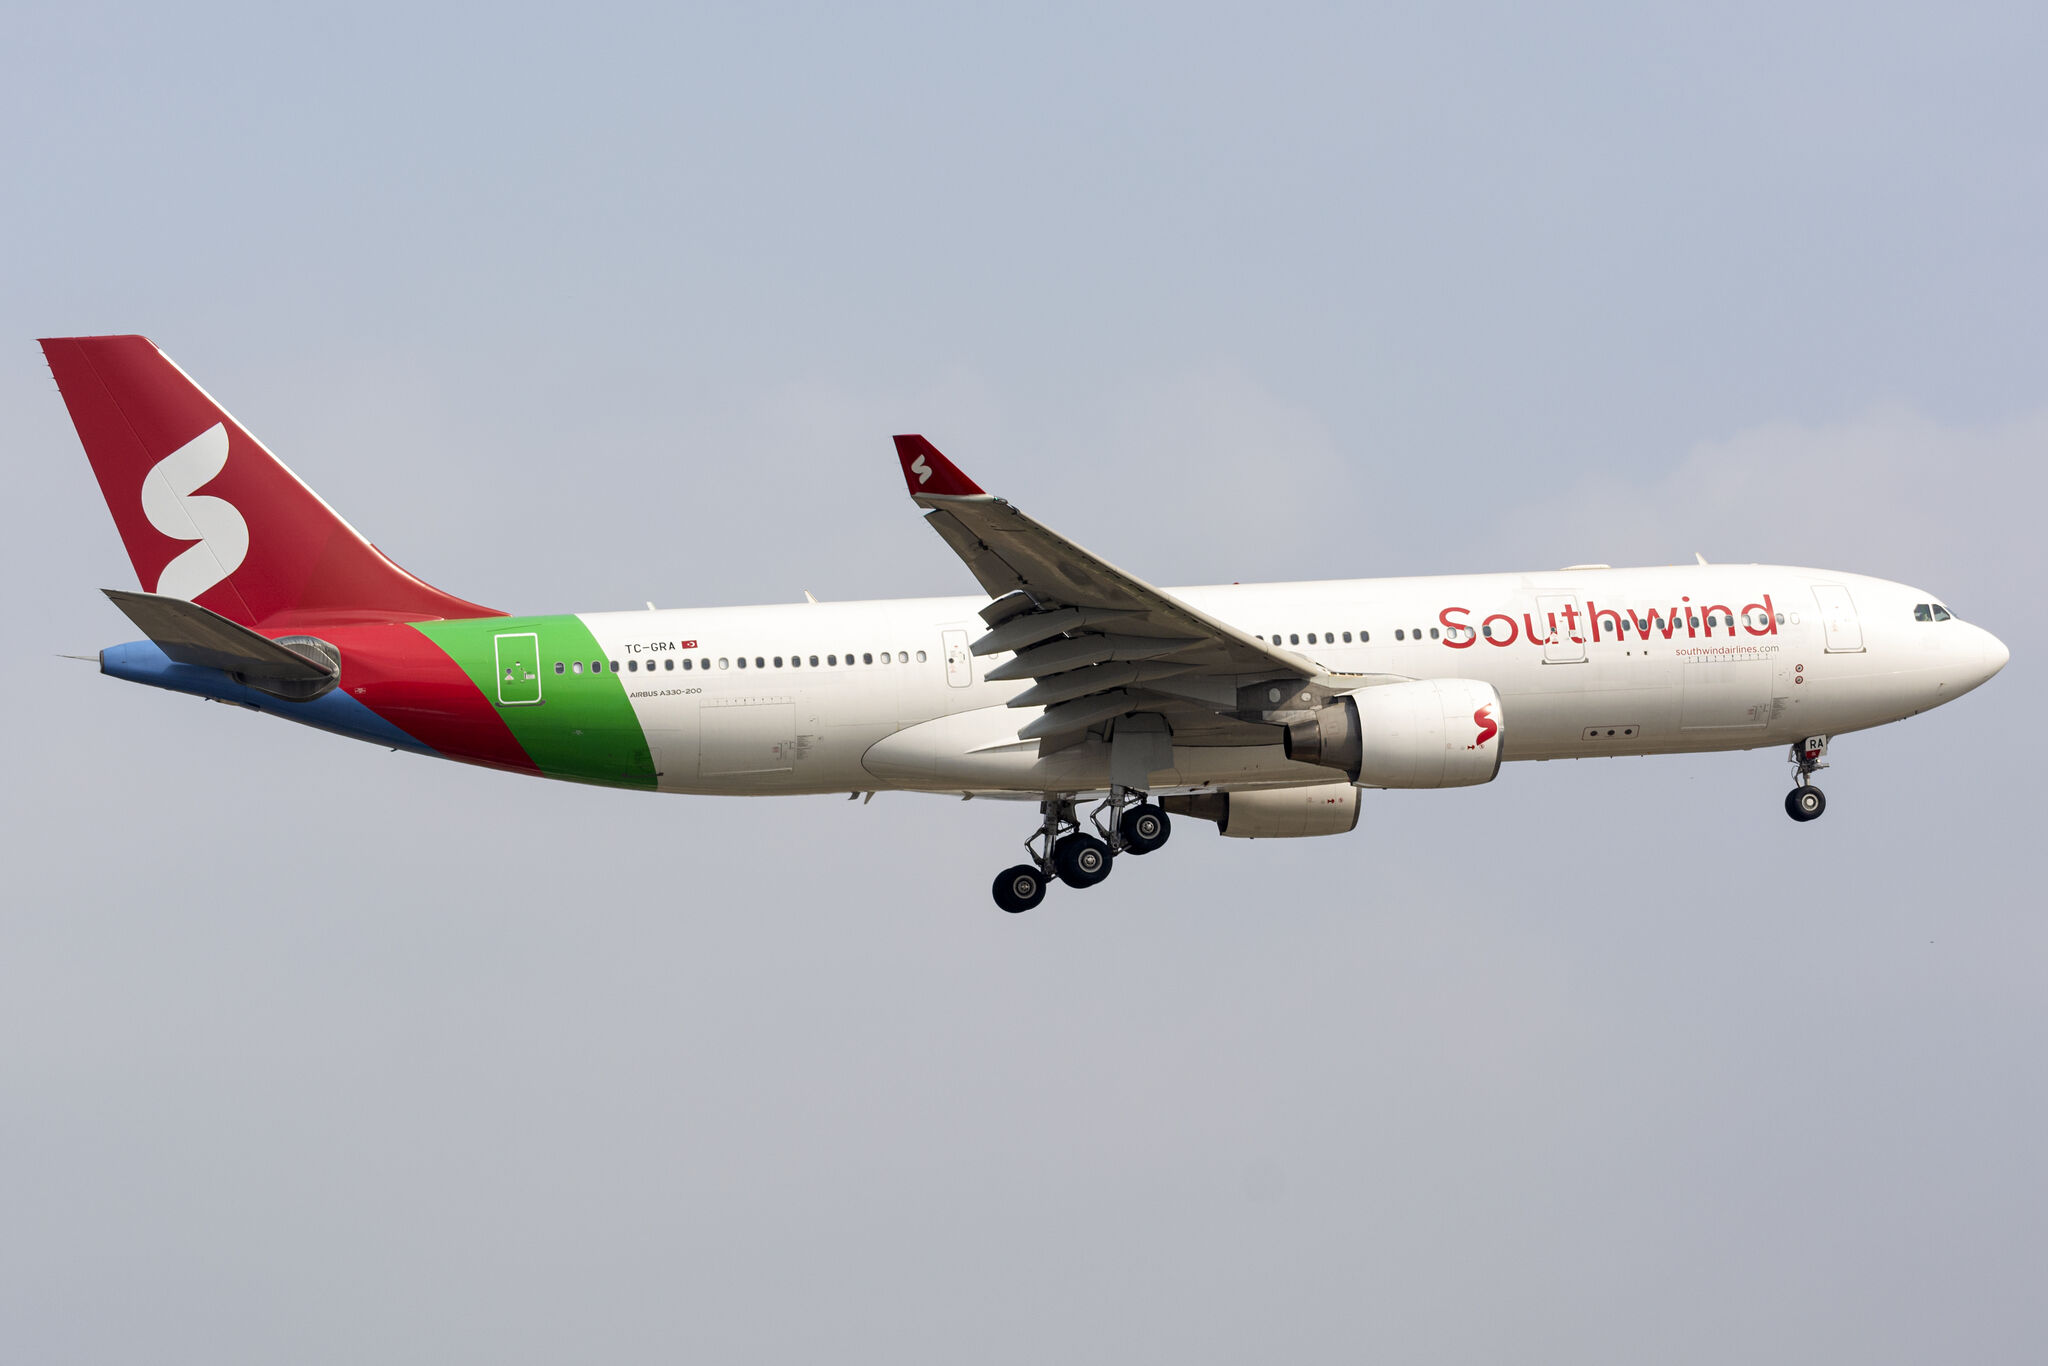 Cortex Havacılık ( Southwind Airlines ) İşletme Ruhsatı 29 Mart 2023